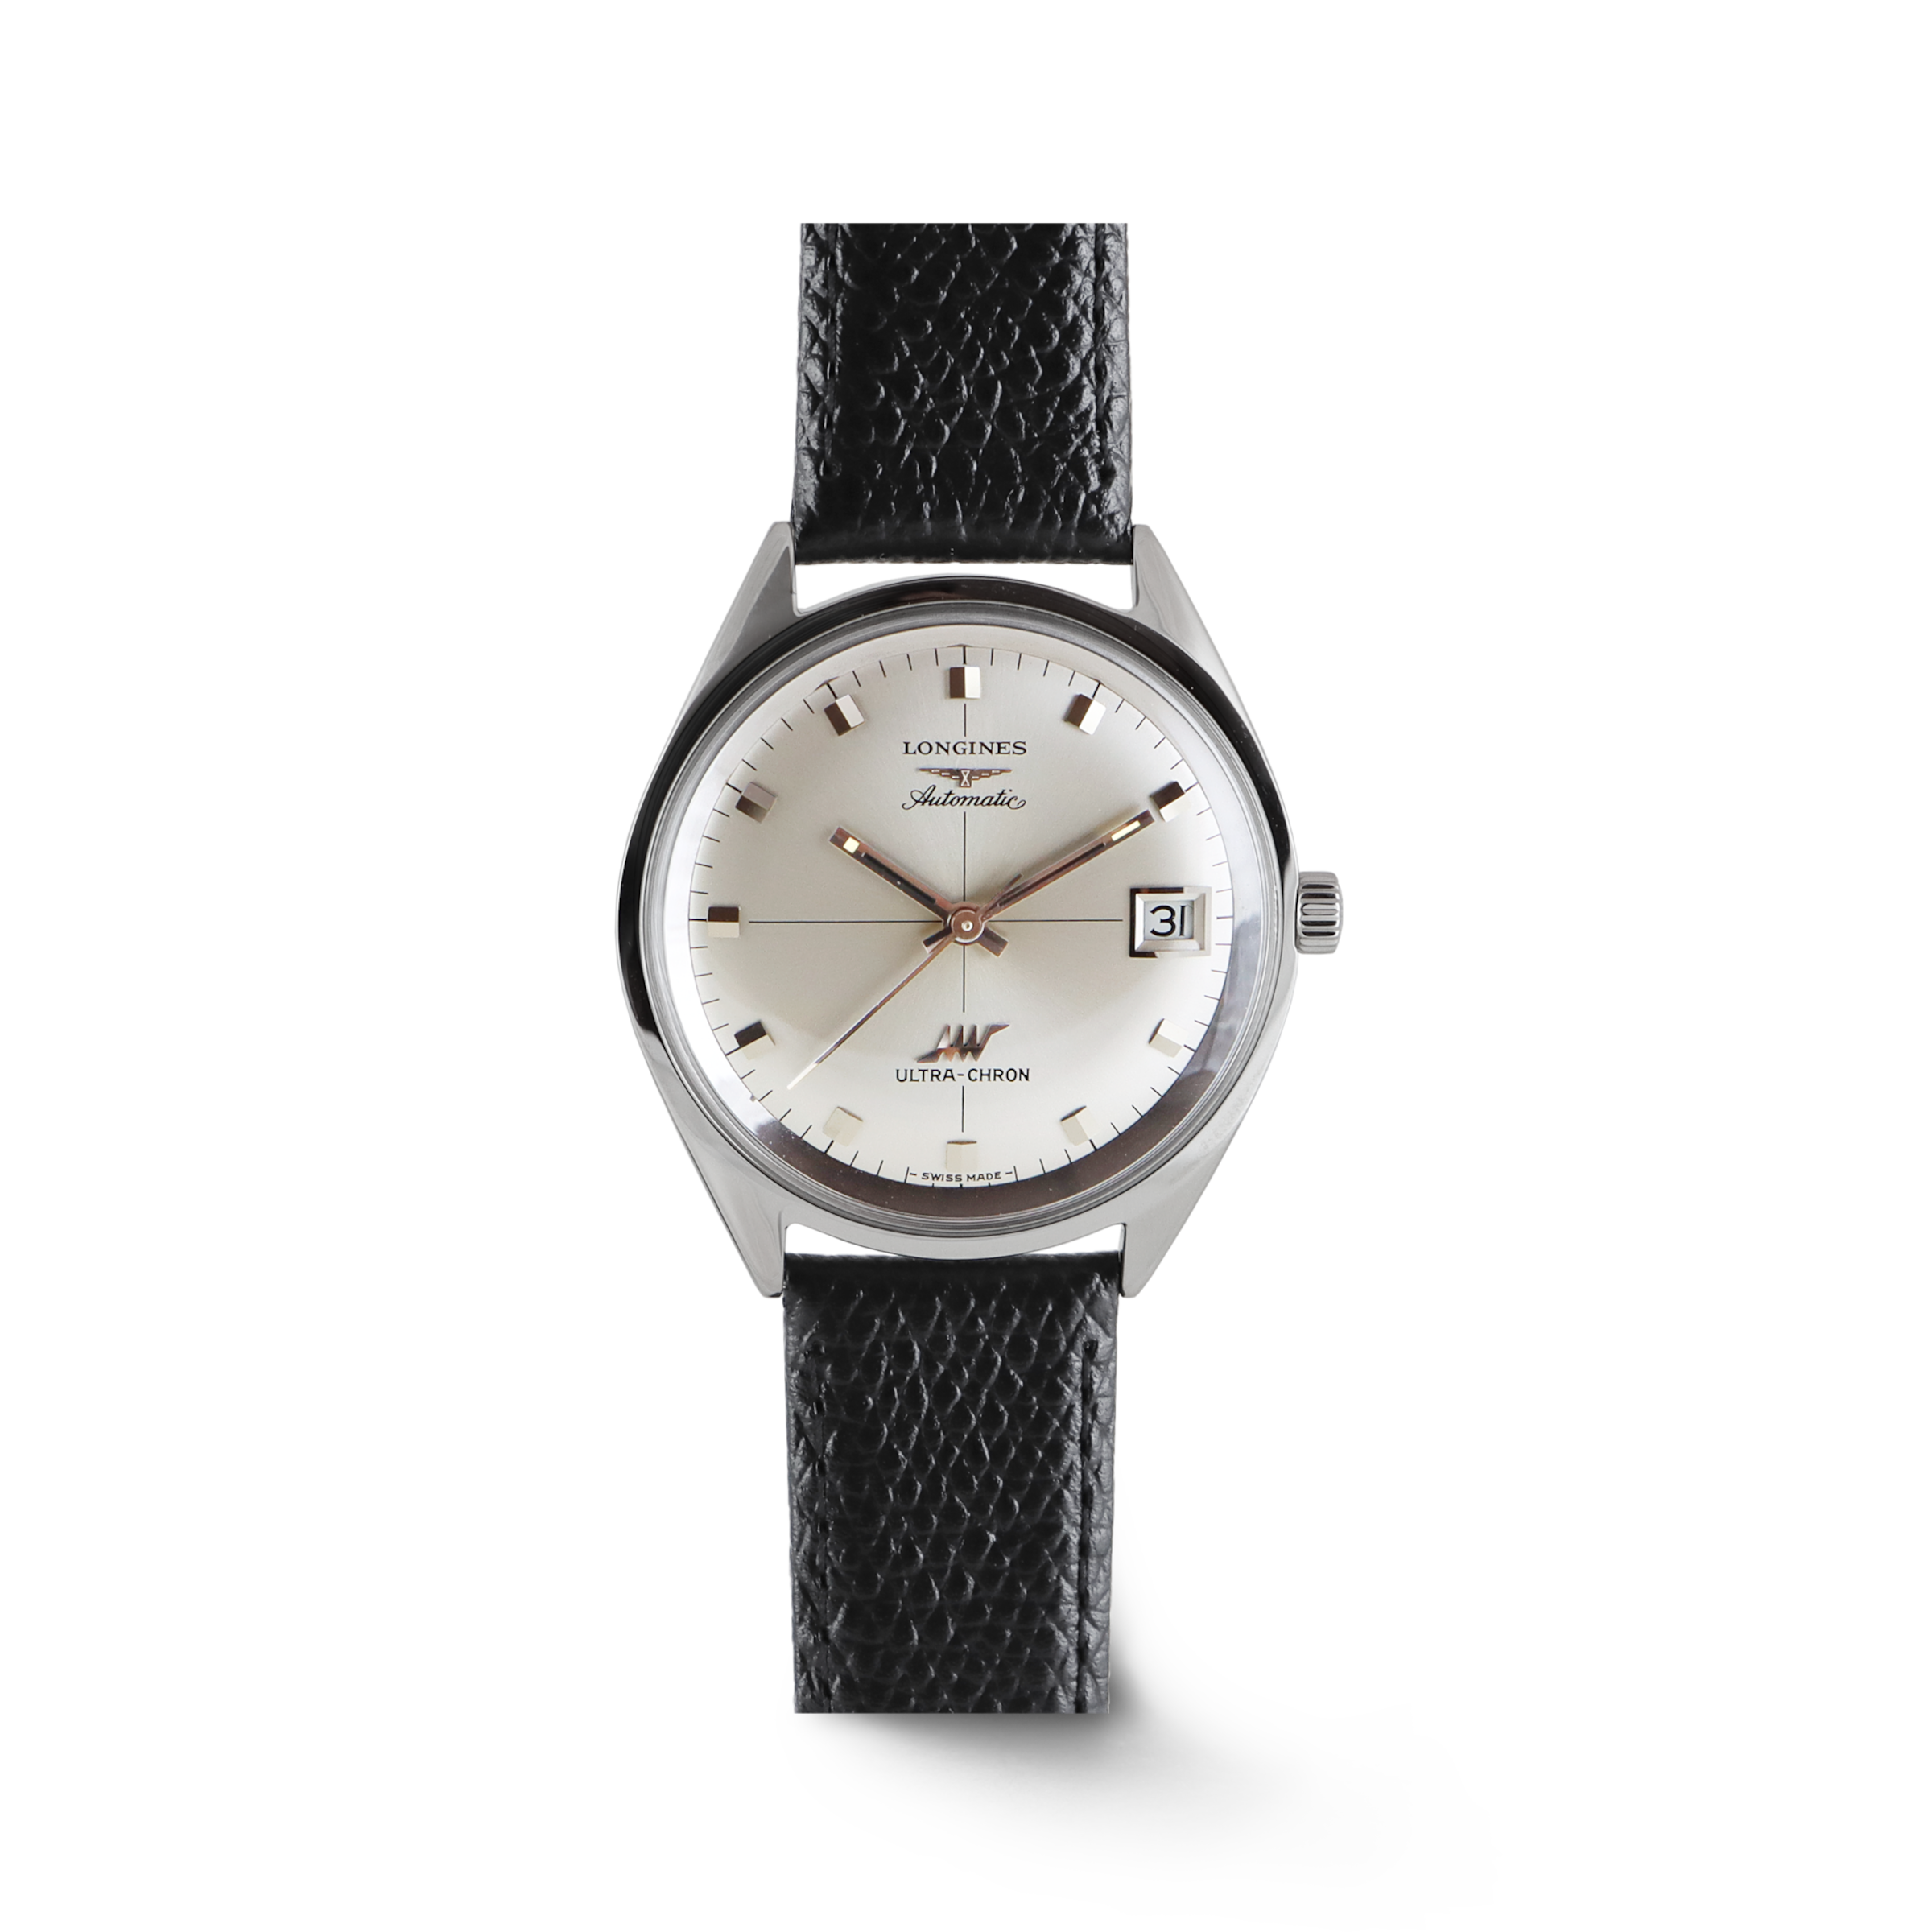 Longines Ultra-Chron horloge met hoge frequentie (1968)